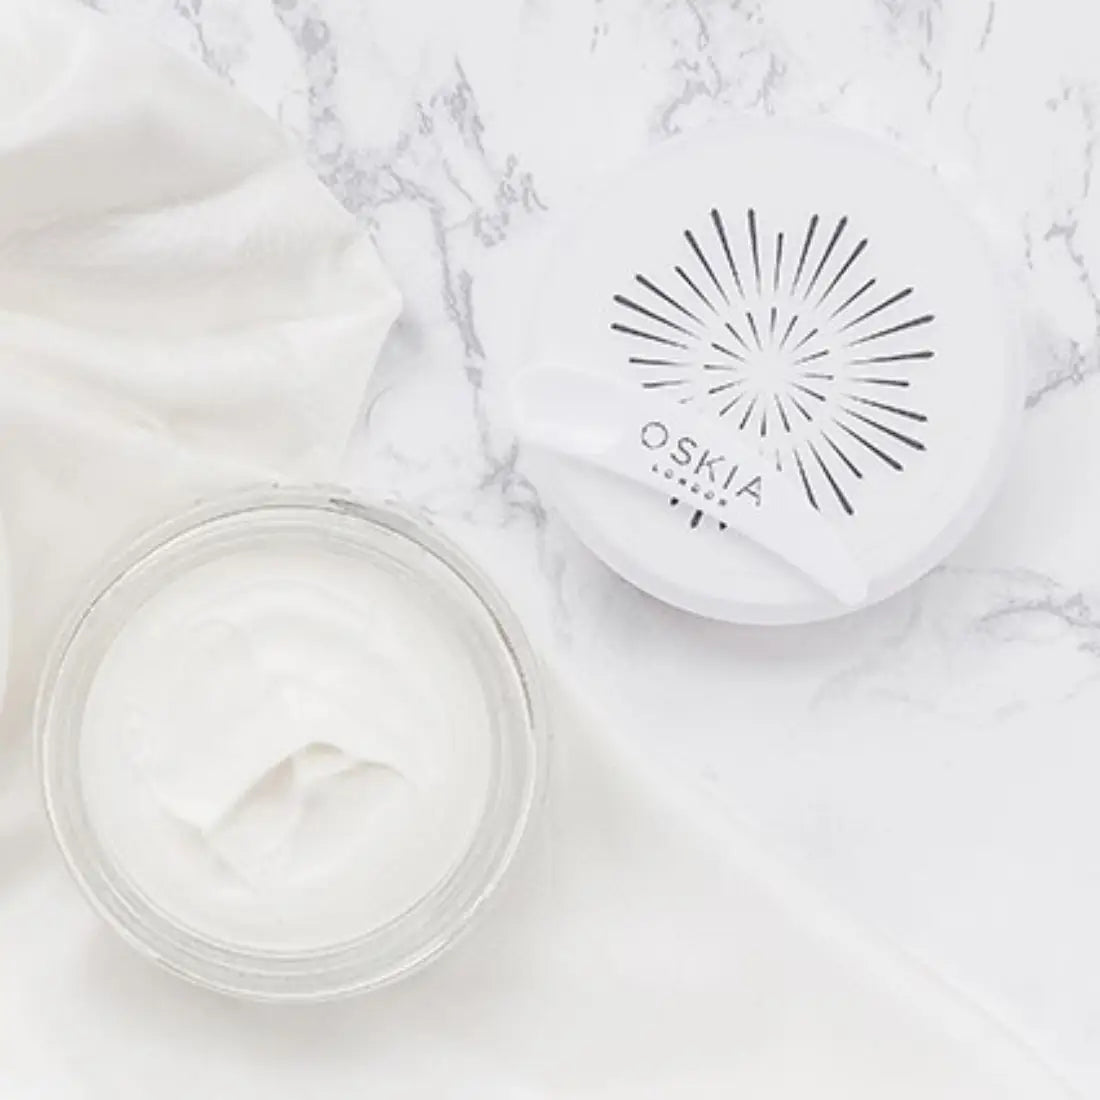 Oskia Skincare Bedtime Beauty Boost 50ml - Free Shipping 